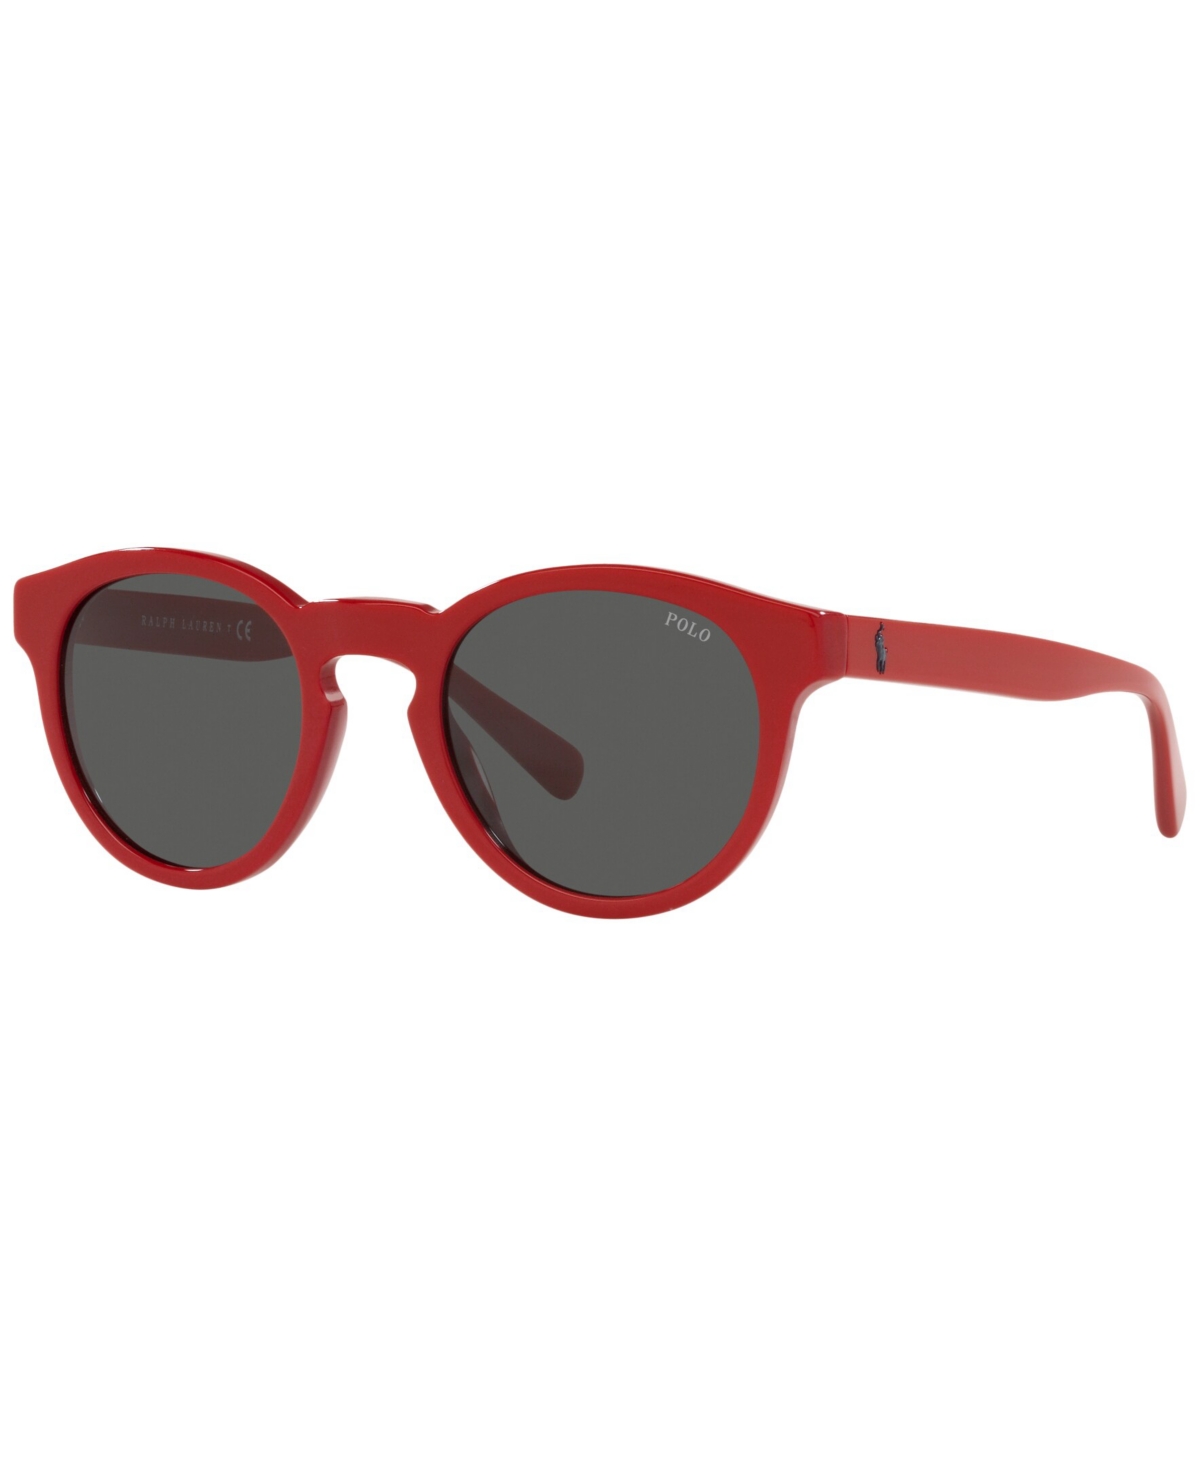 Polo Ralph Lauren Men's Sunglasses, Ph4184 In Shiny Red